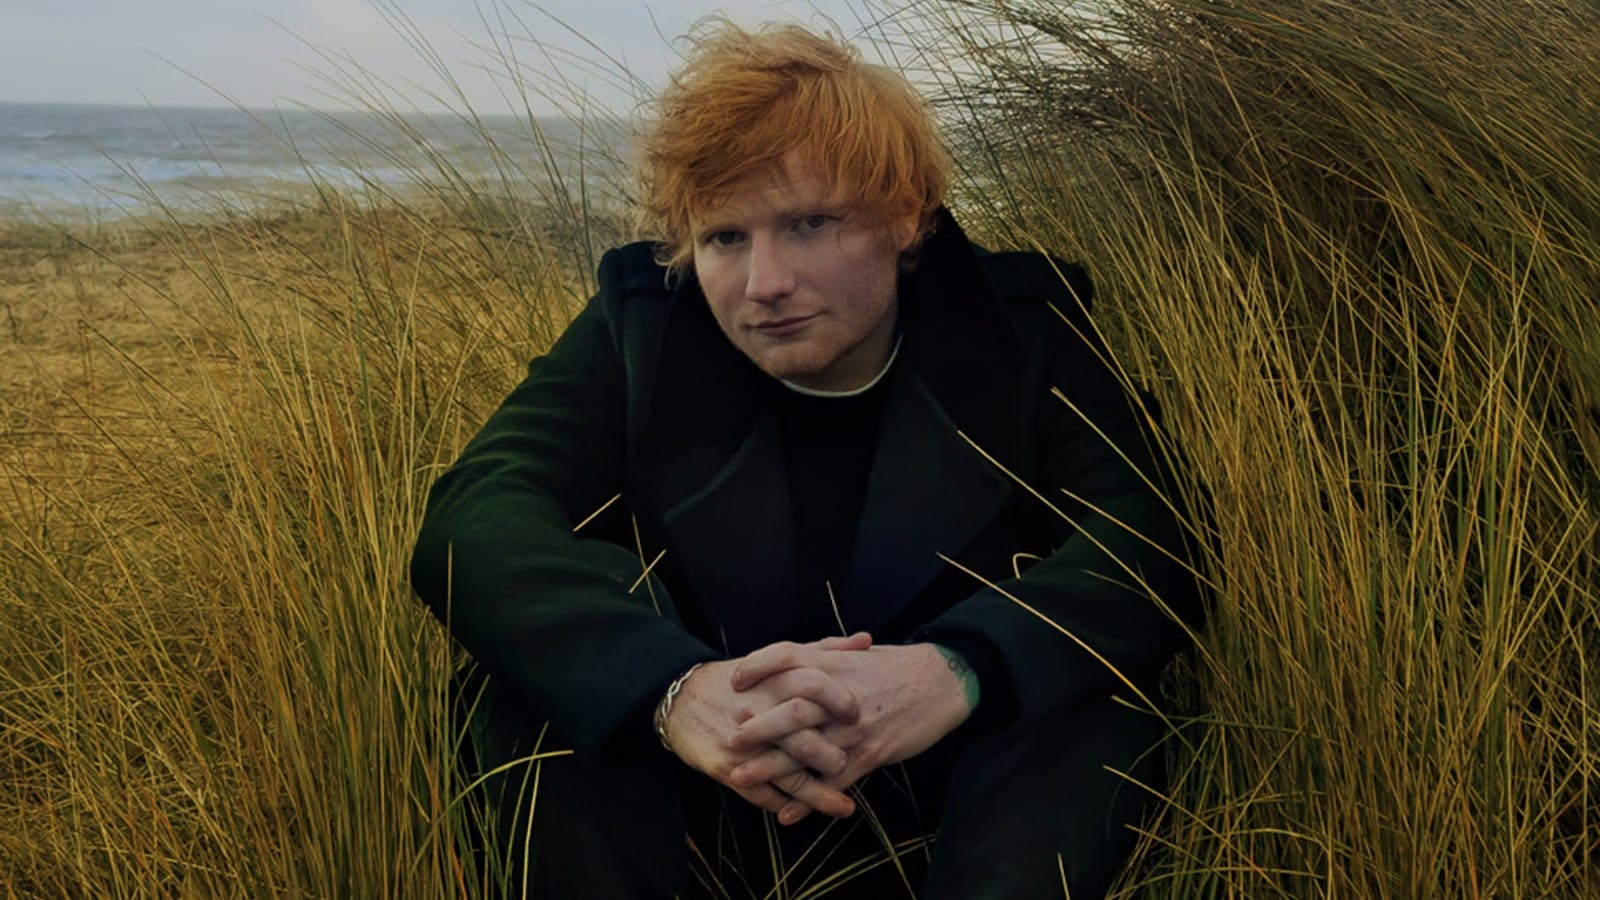 Ed Sheeran’s next album is based on Elgar’s Enigma